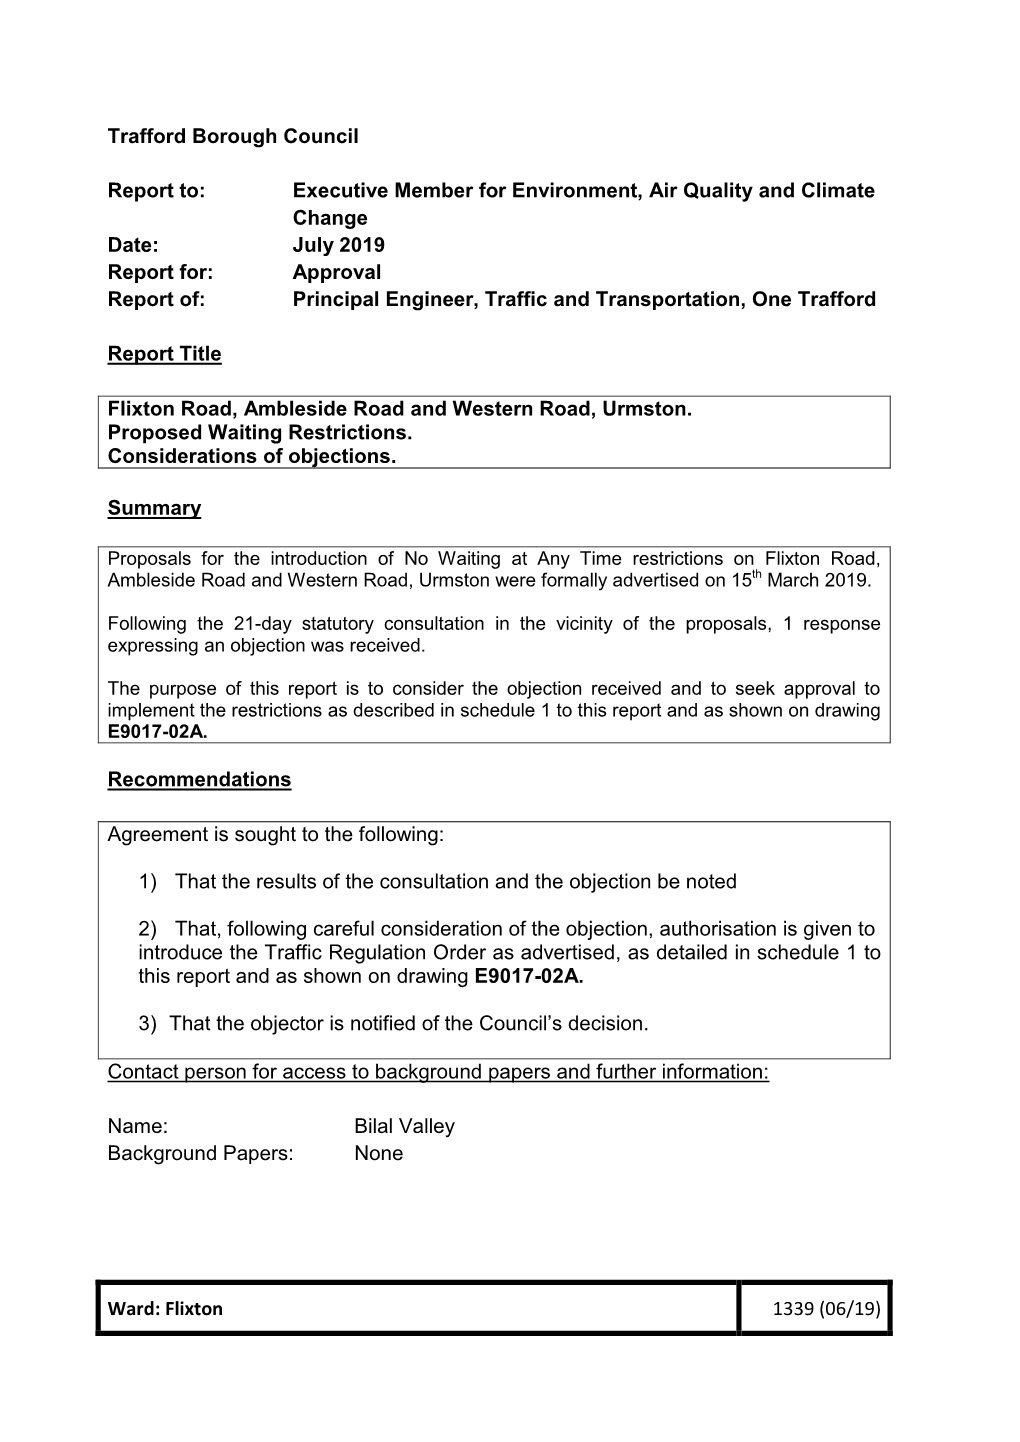 Ward: Flixton 1339 (06/19) Trafford Borough Council Report To